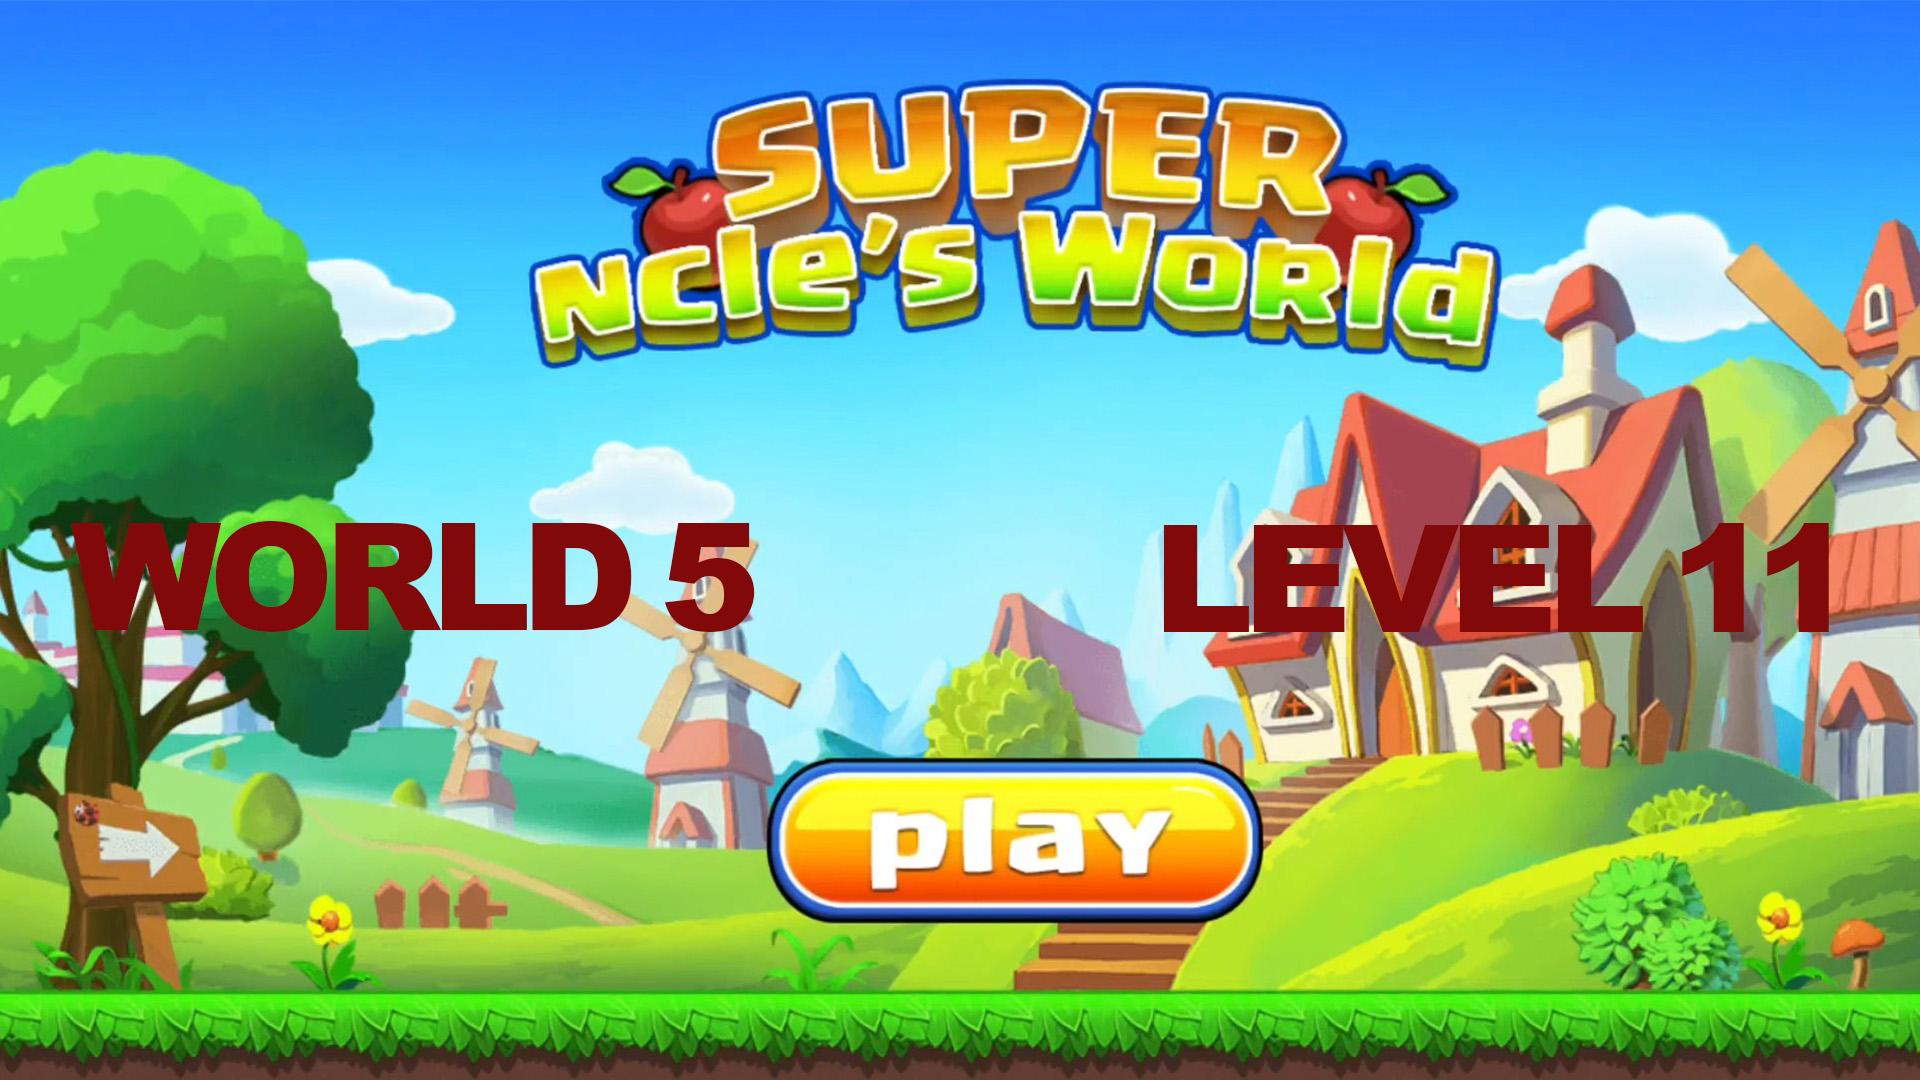 Super ncle's  World 5. Level 11.